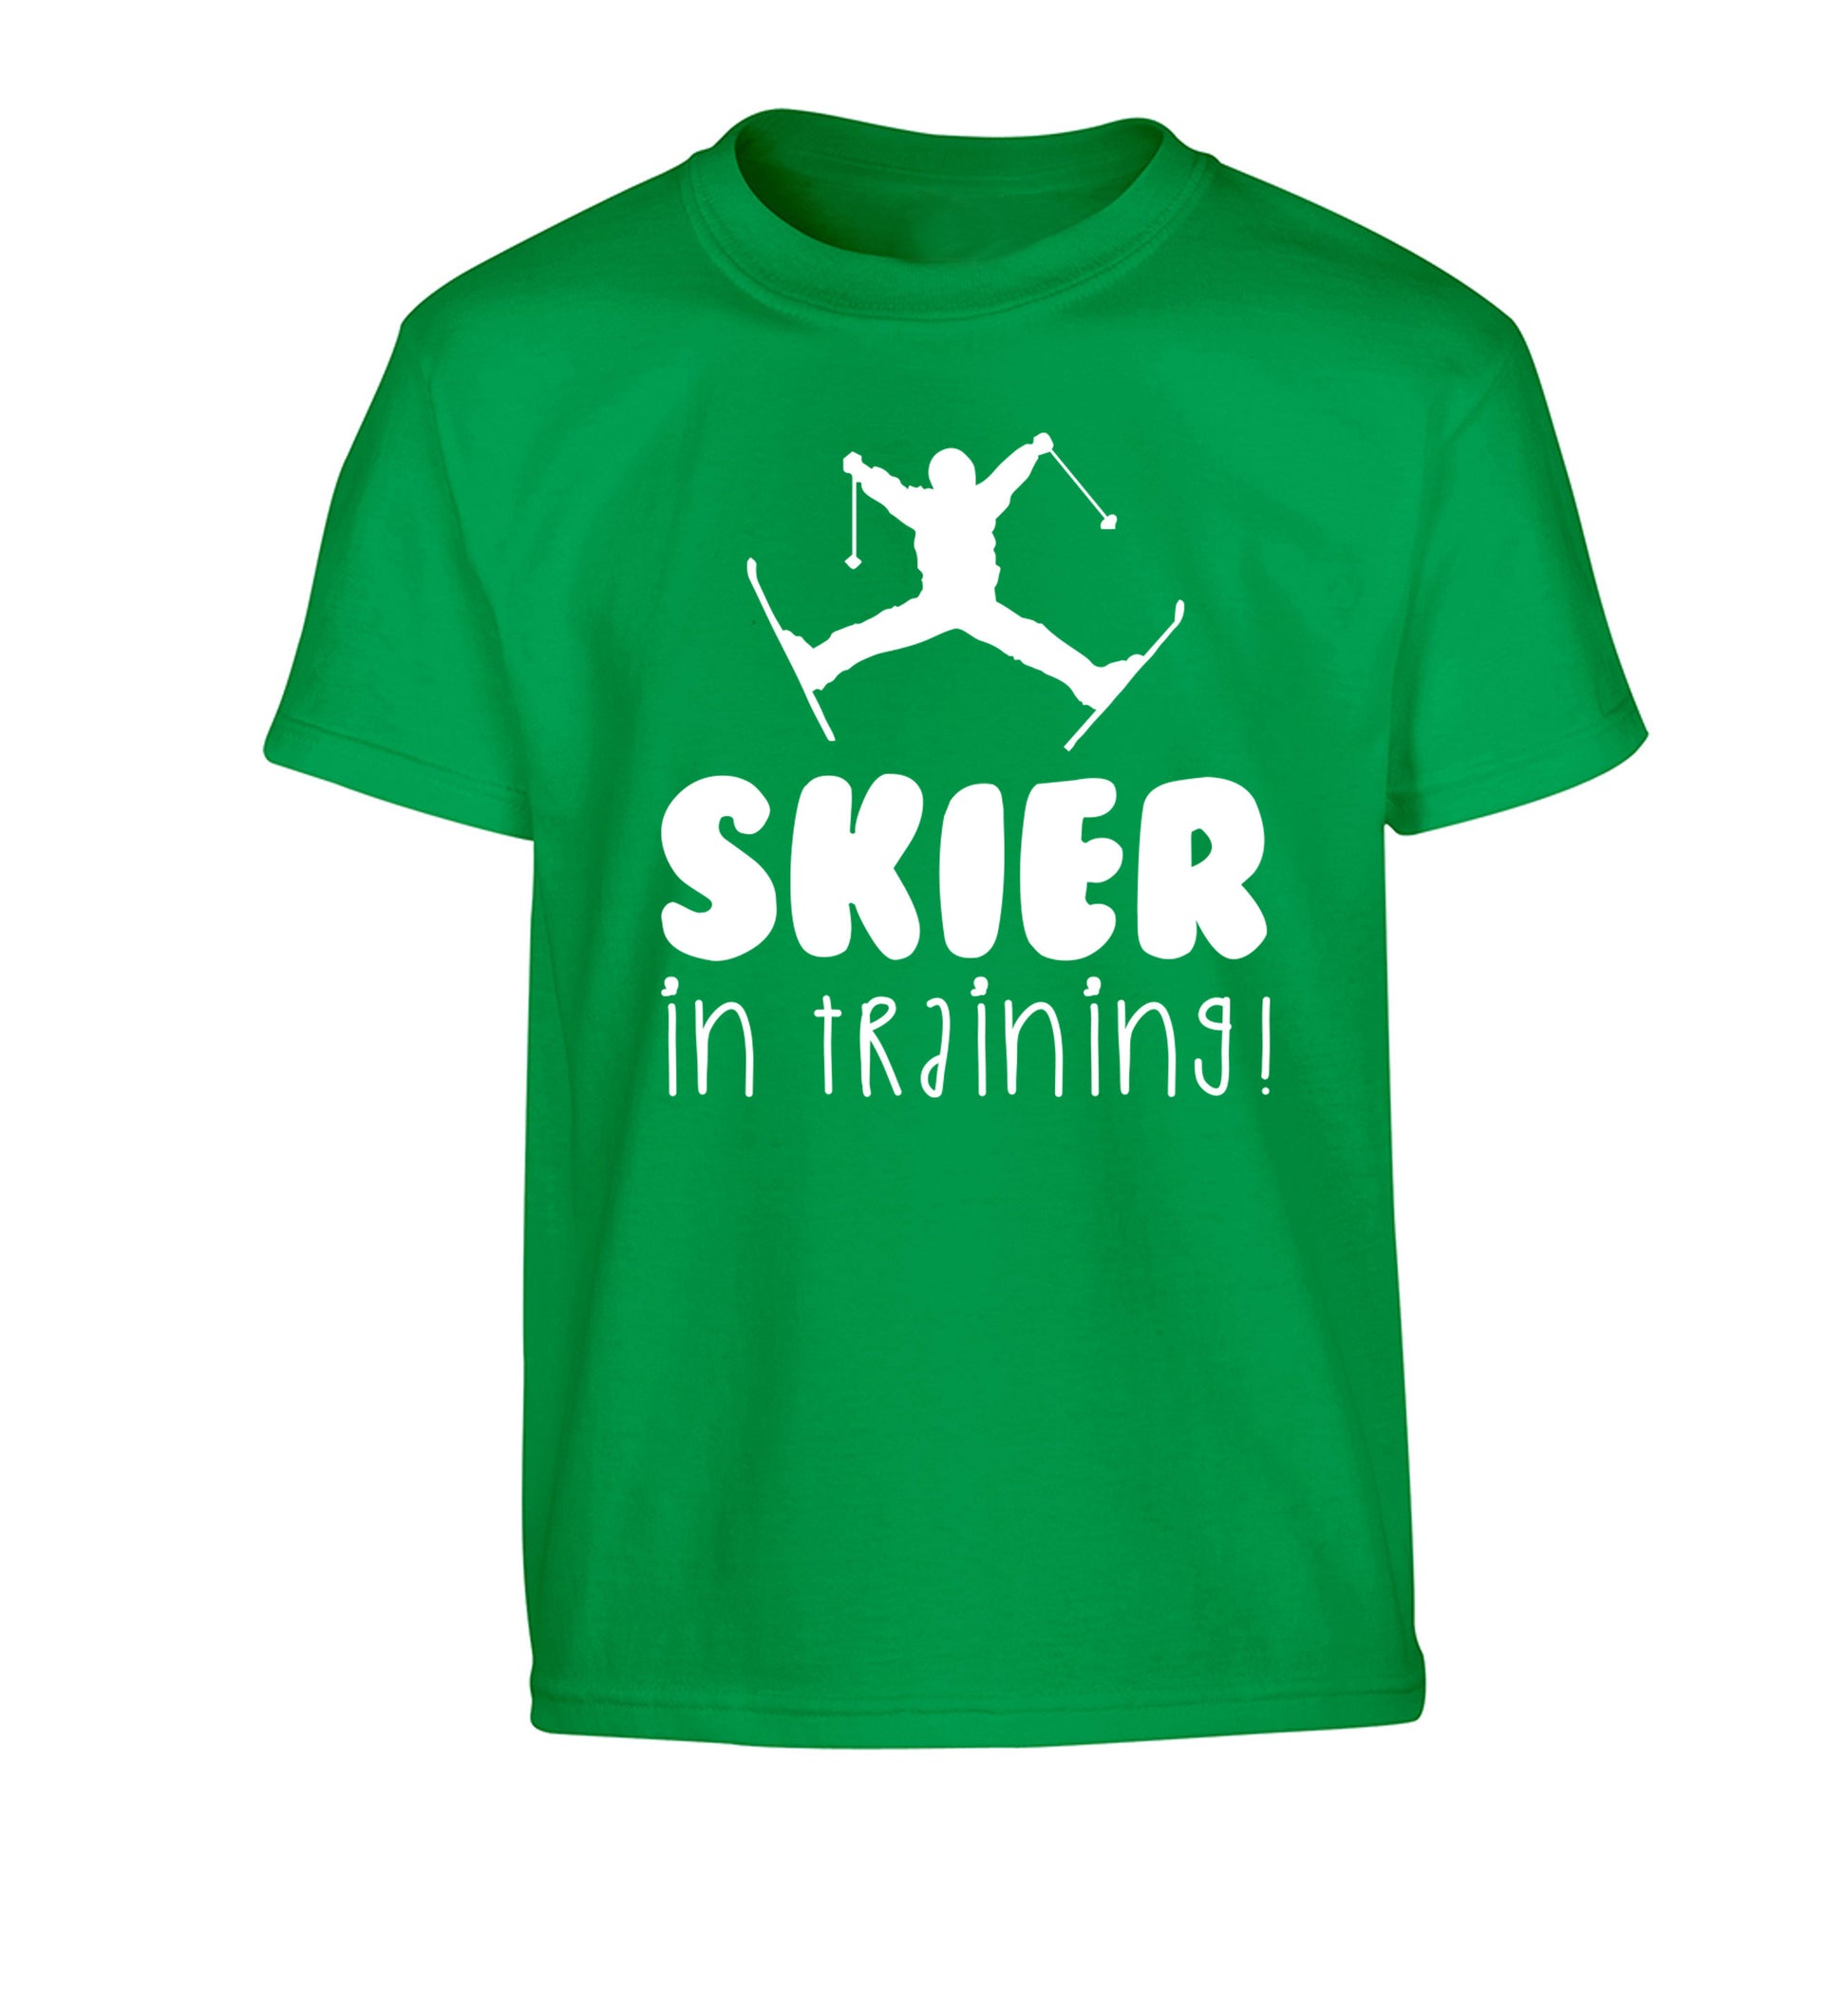 Skier in training Children's green Tshirt 12-14 Years